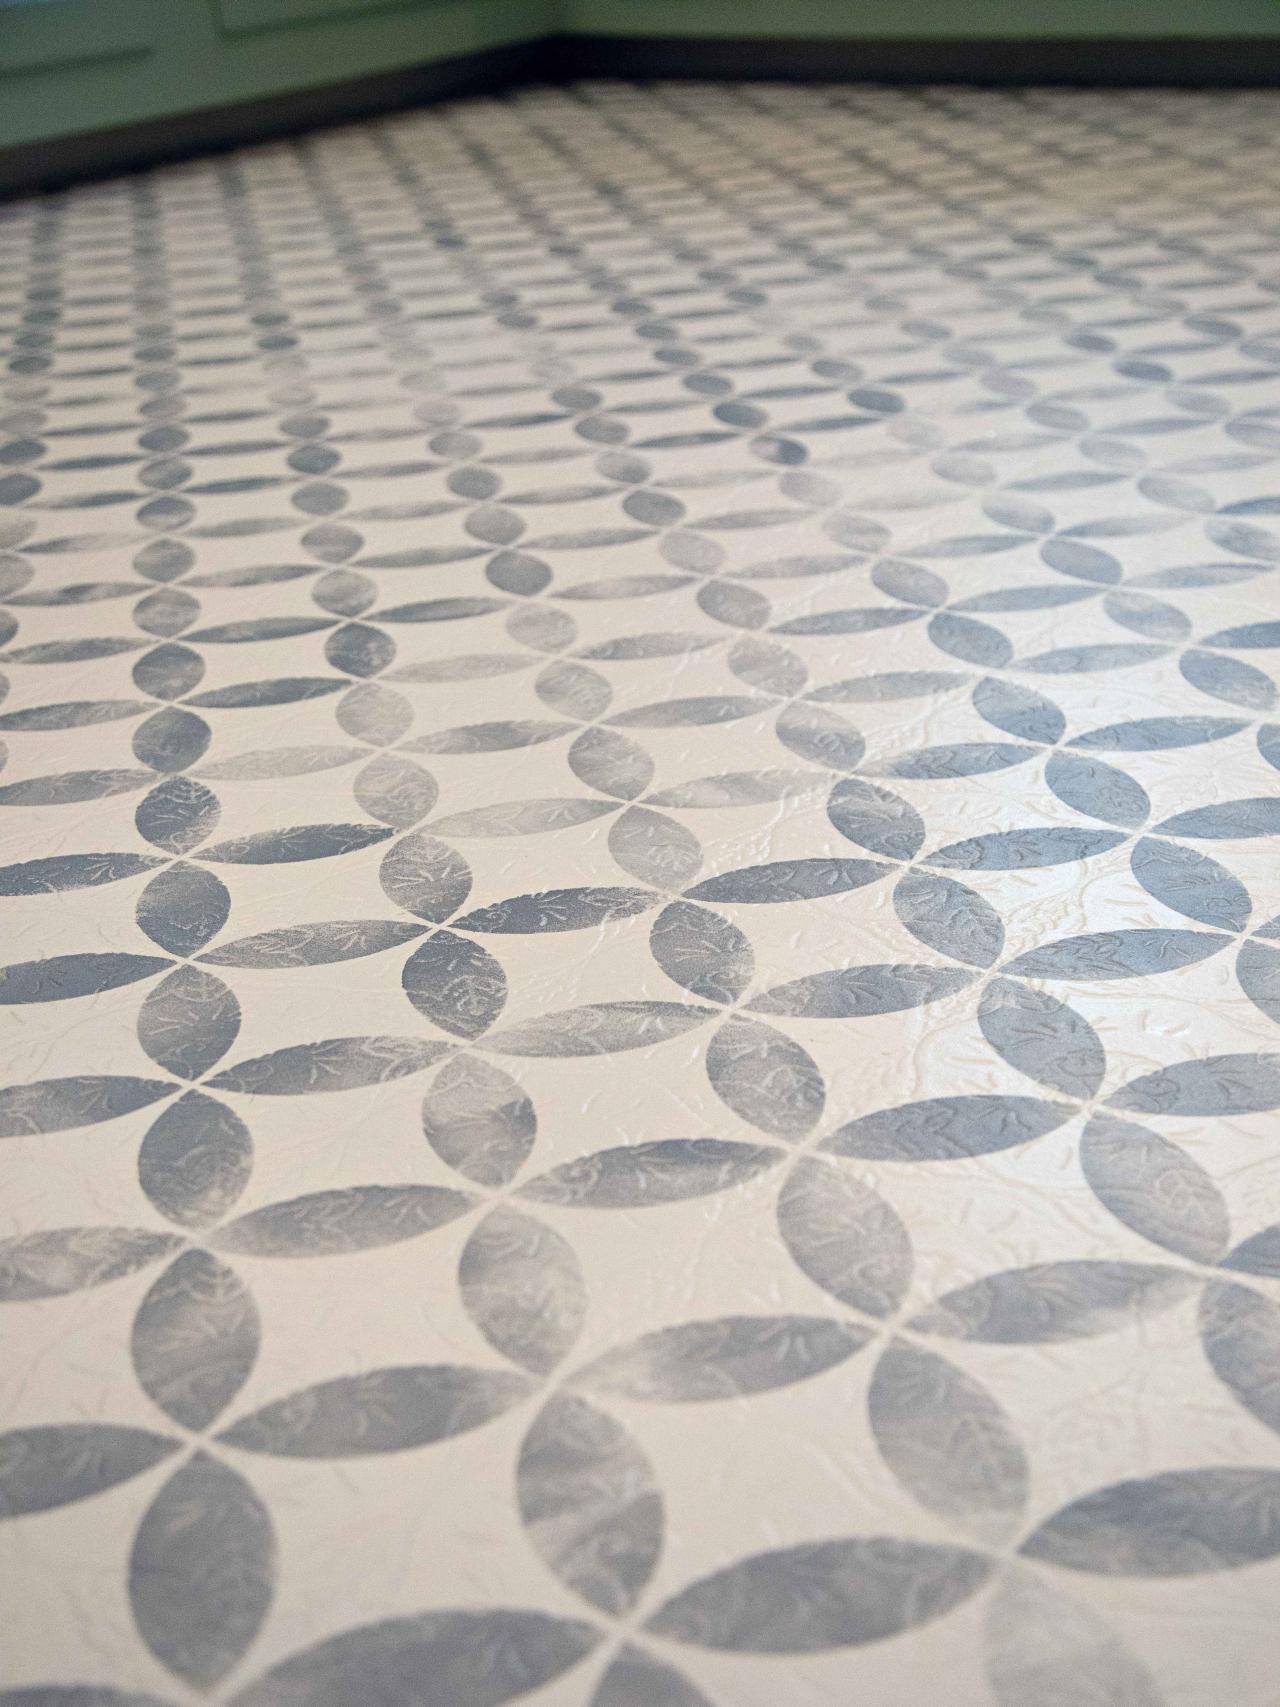 How To Paint Old Vinyl Floors Look, Best Paint For Tile Floors